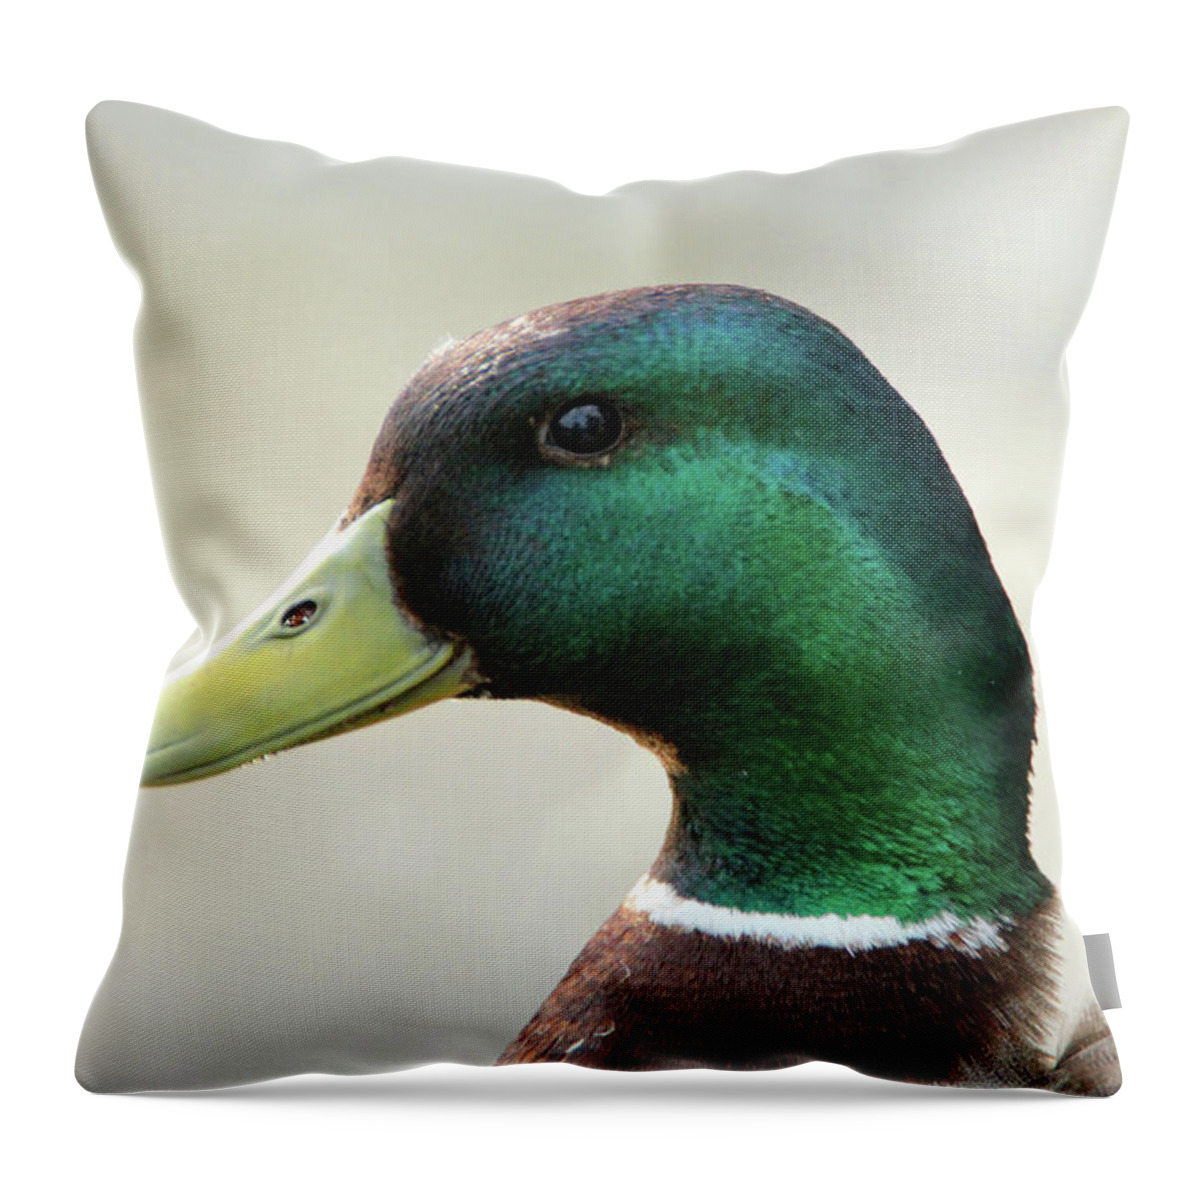 Wildlife Throw Pillow featuring the photograph Duck Portrait by David Stasiak